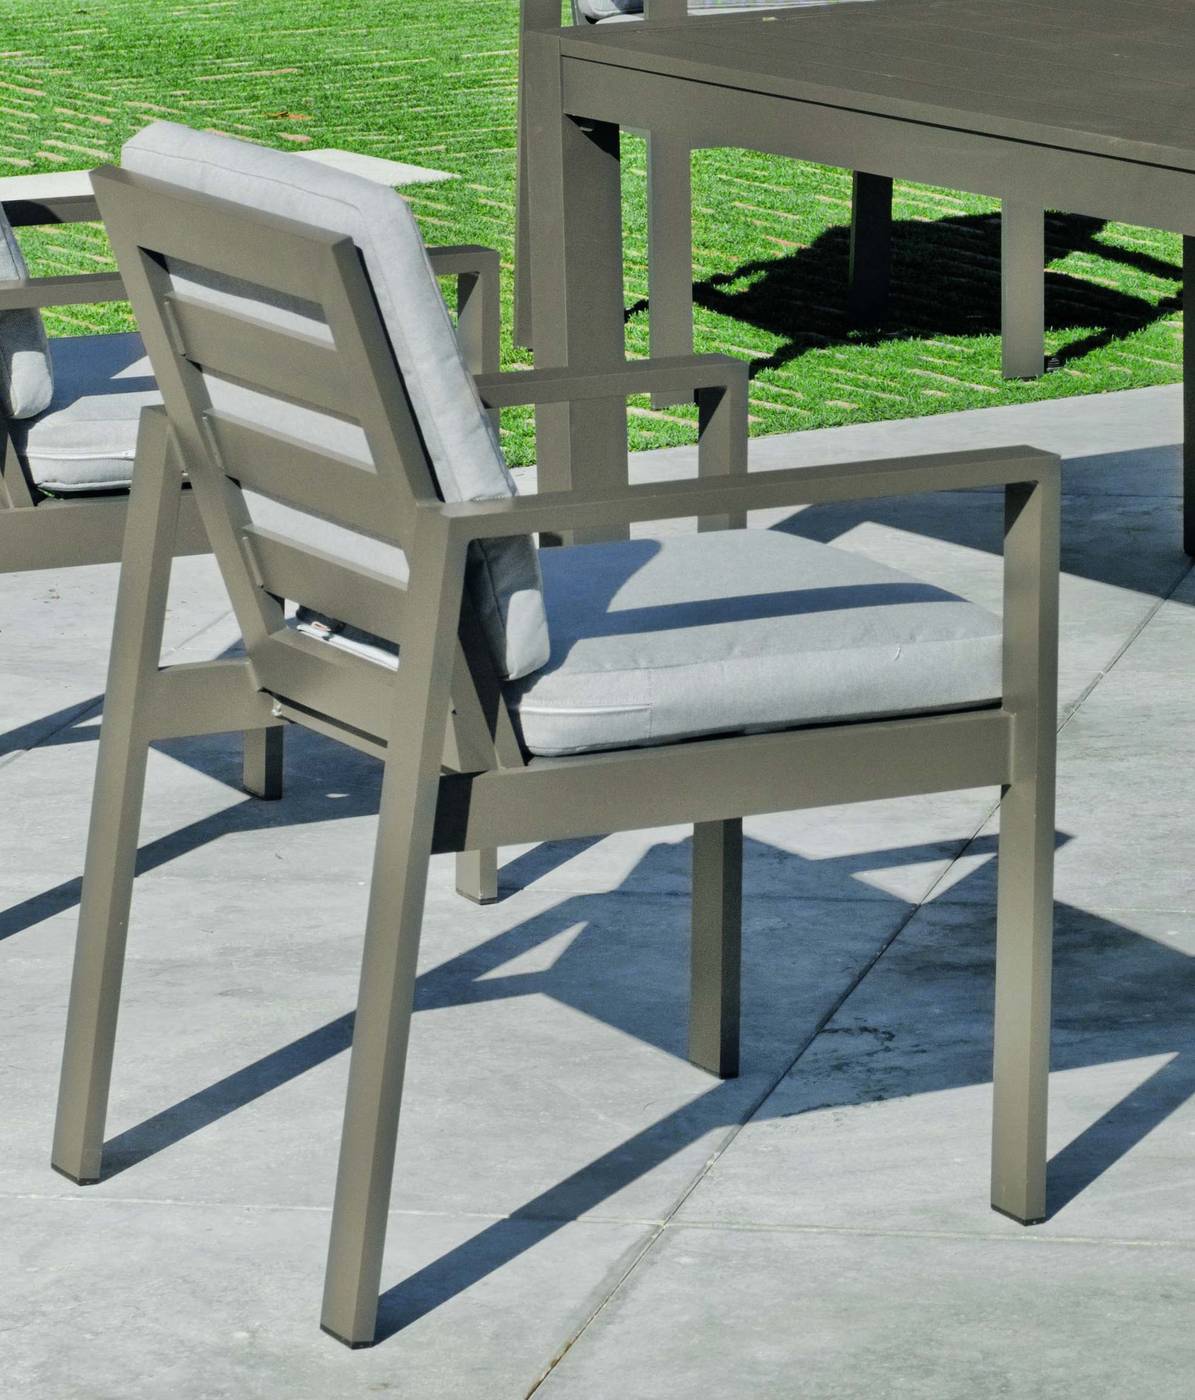 Sillón Aluminio Camelia-30 - Sillón comedor para jardín o terraza. Estructura, asiento y respaldo de aluminio. Disponible en color blanco, antracita, champagne, plata o marrón.